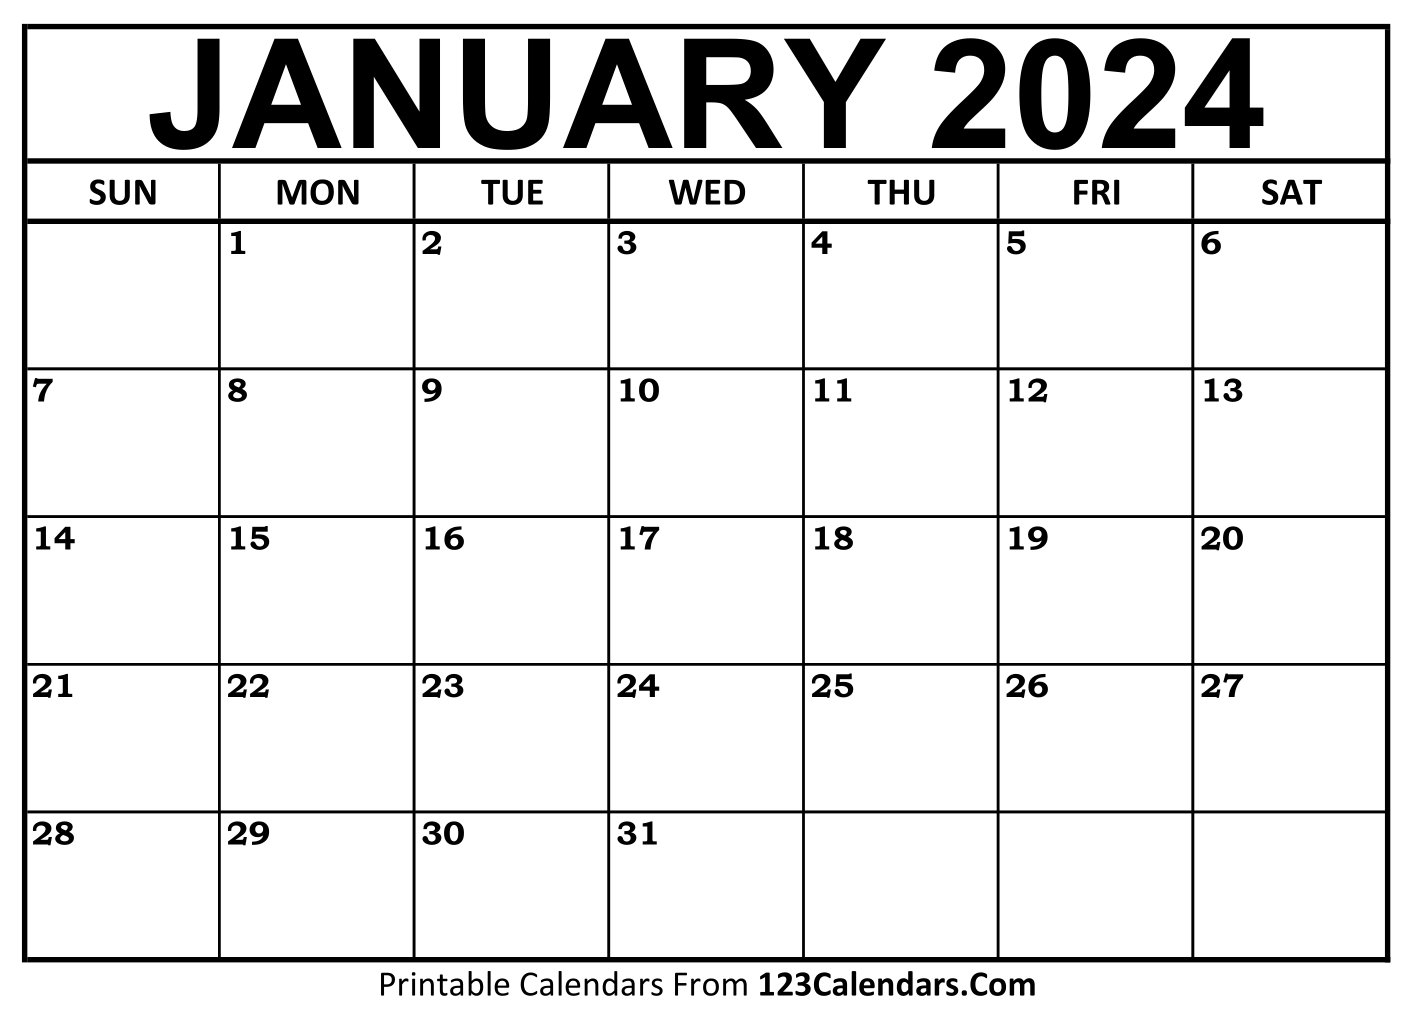 Printable January 2024 Calendar Templates - 123Calendars for Printable Monthly Calendar 2024 January